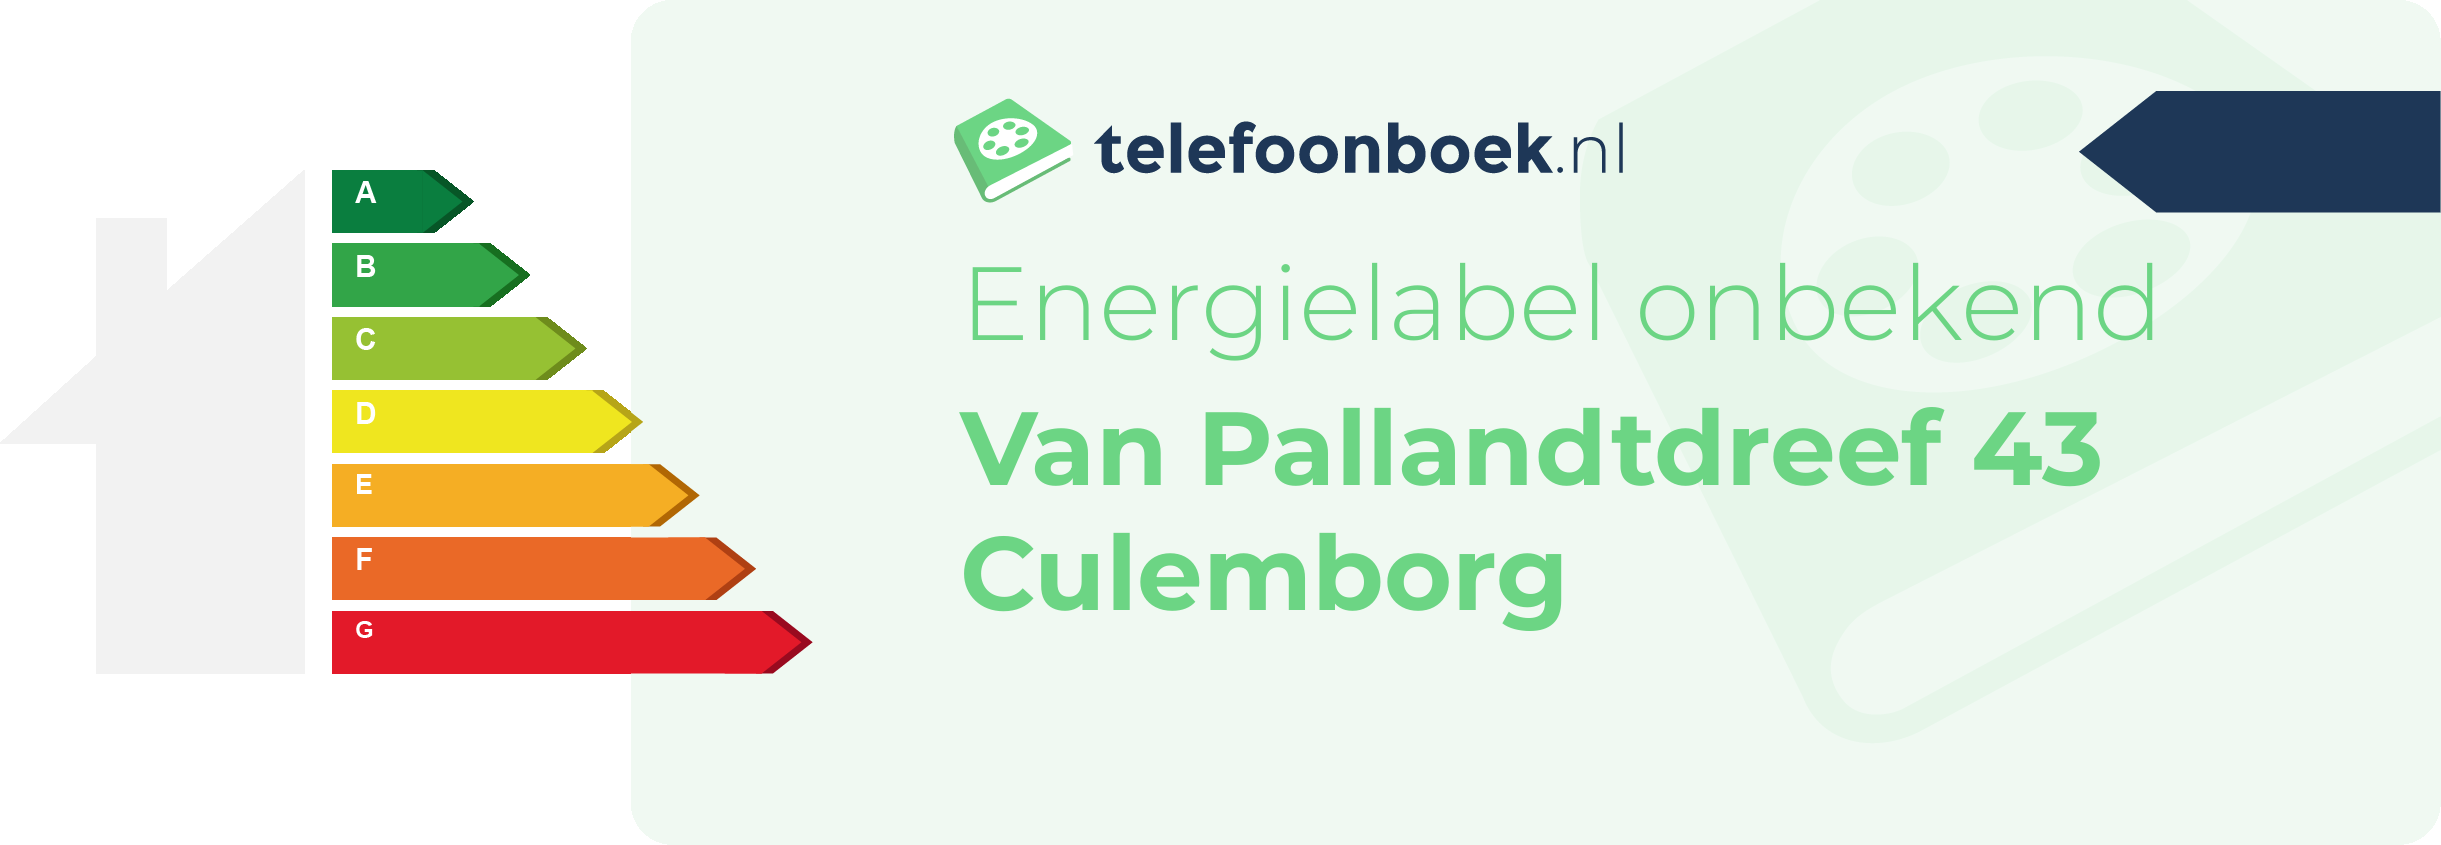 Energielabel Van Pallandtdreef 43 Culemborg